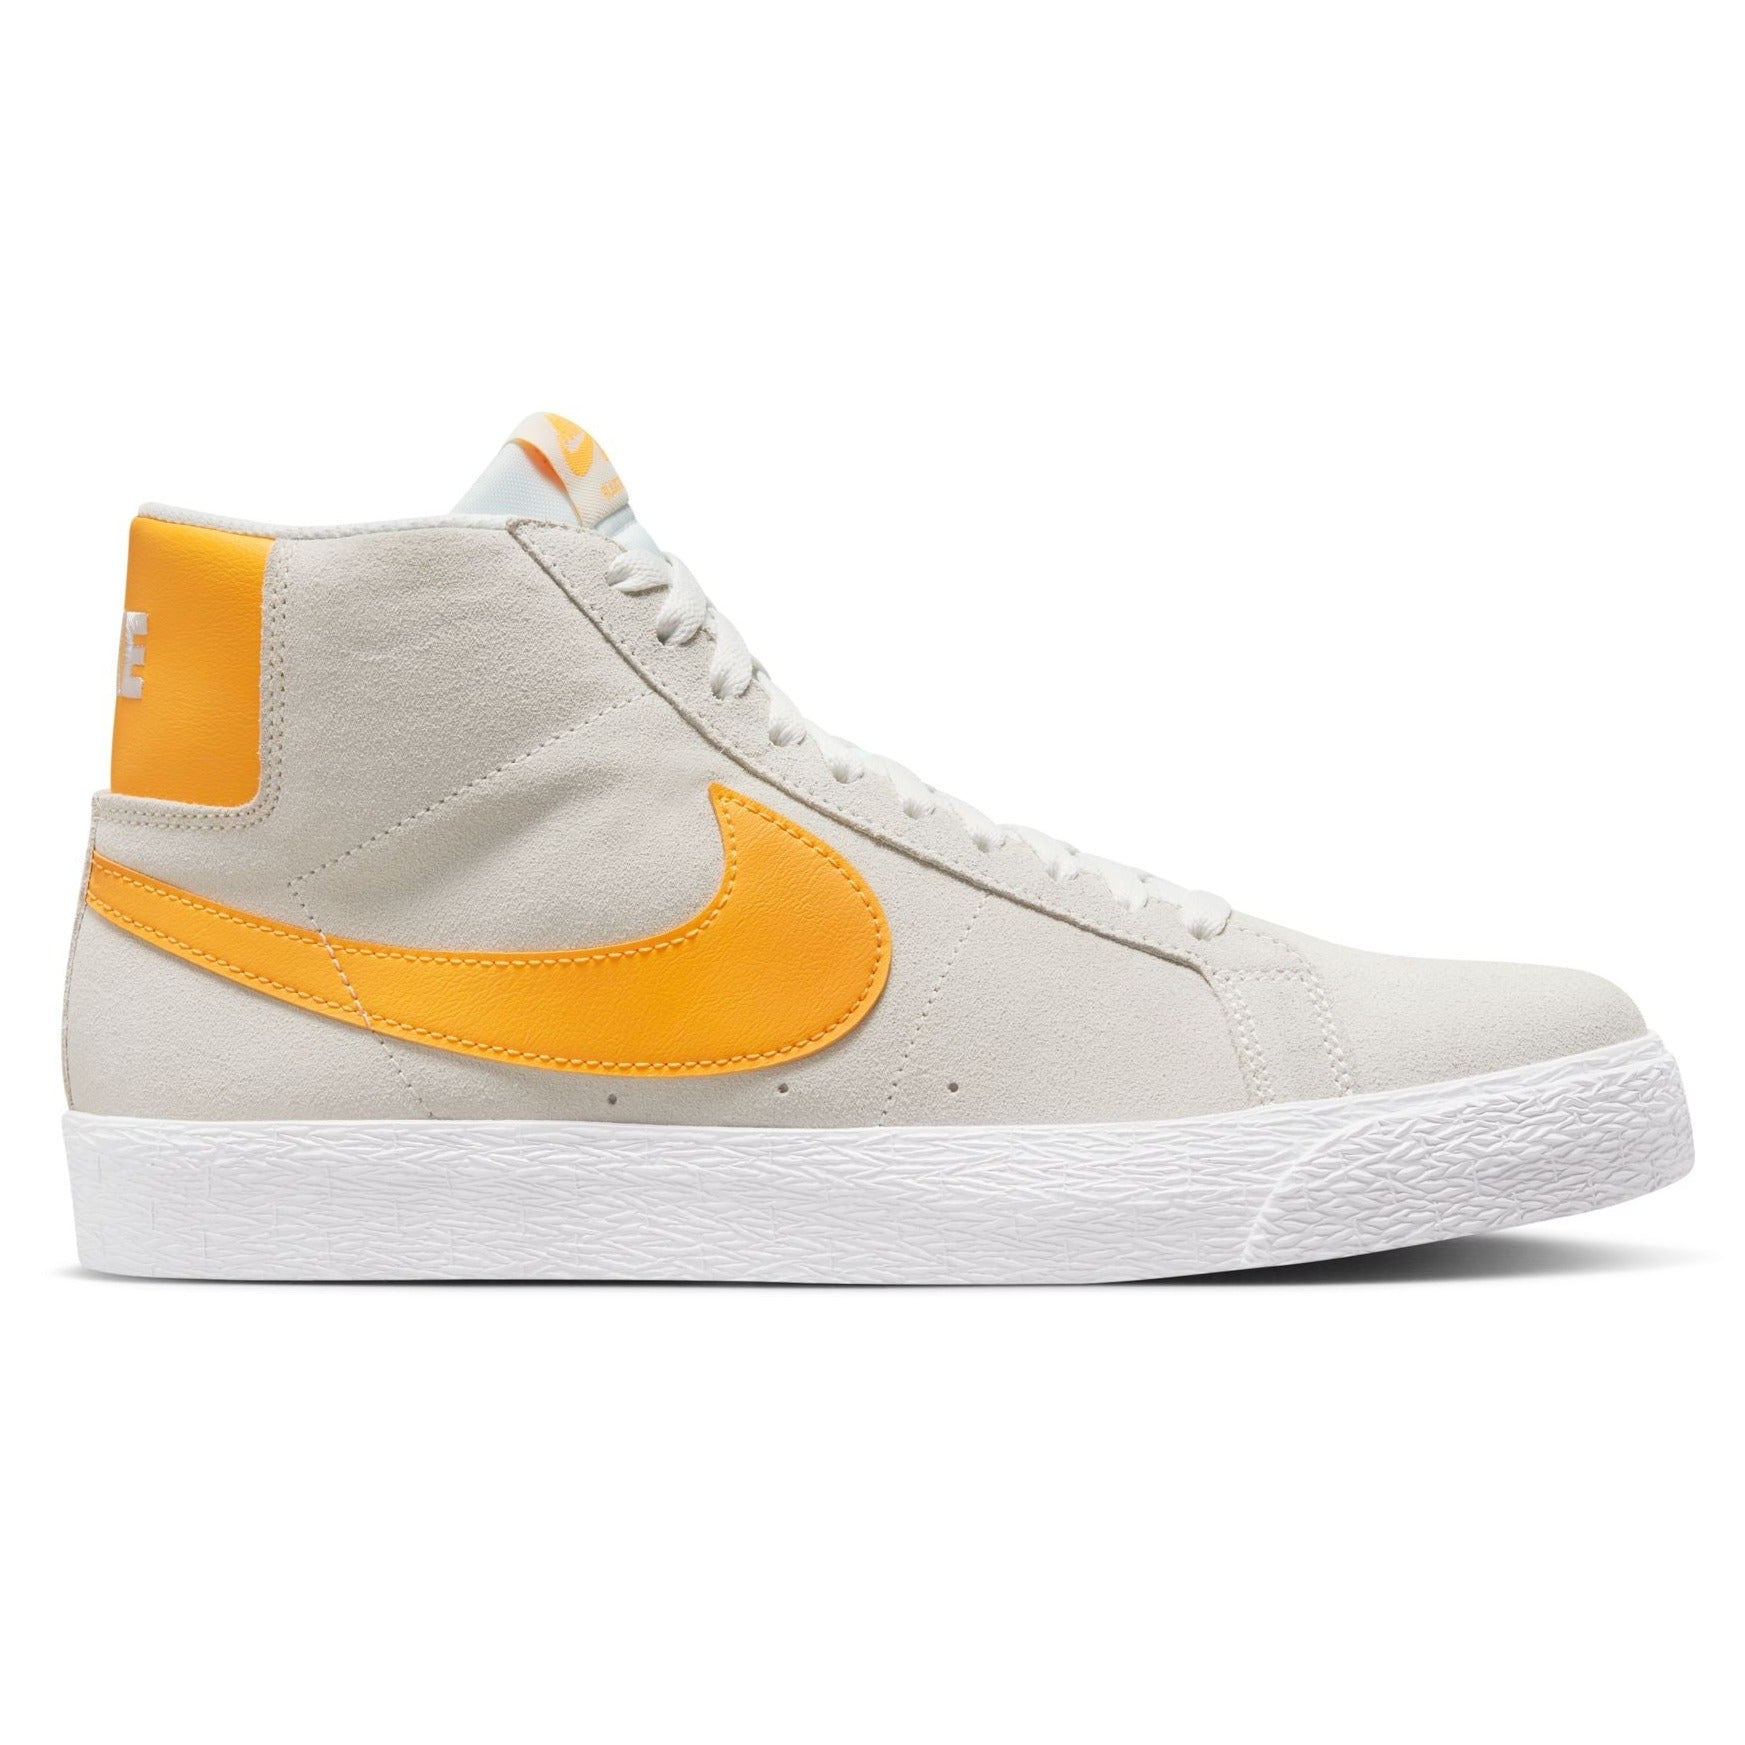 Summit White/Laser Orange Blazer Mid Nike SB Skateboard Shoe